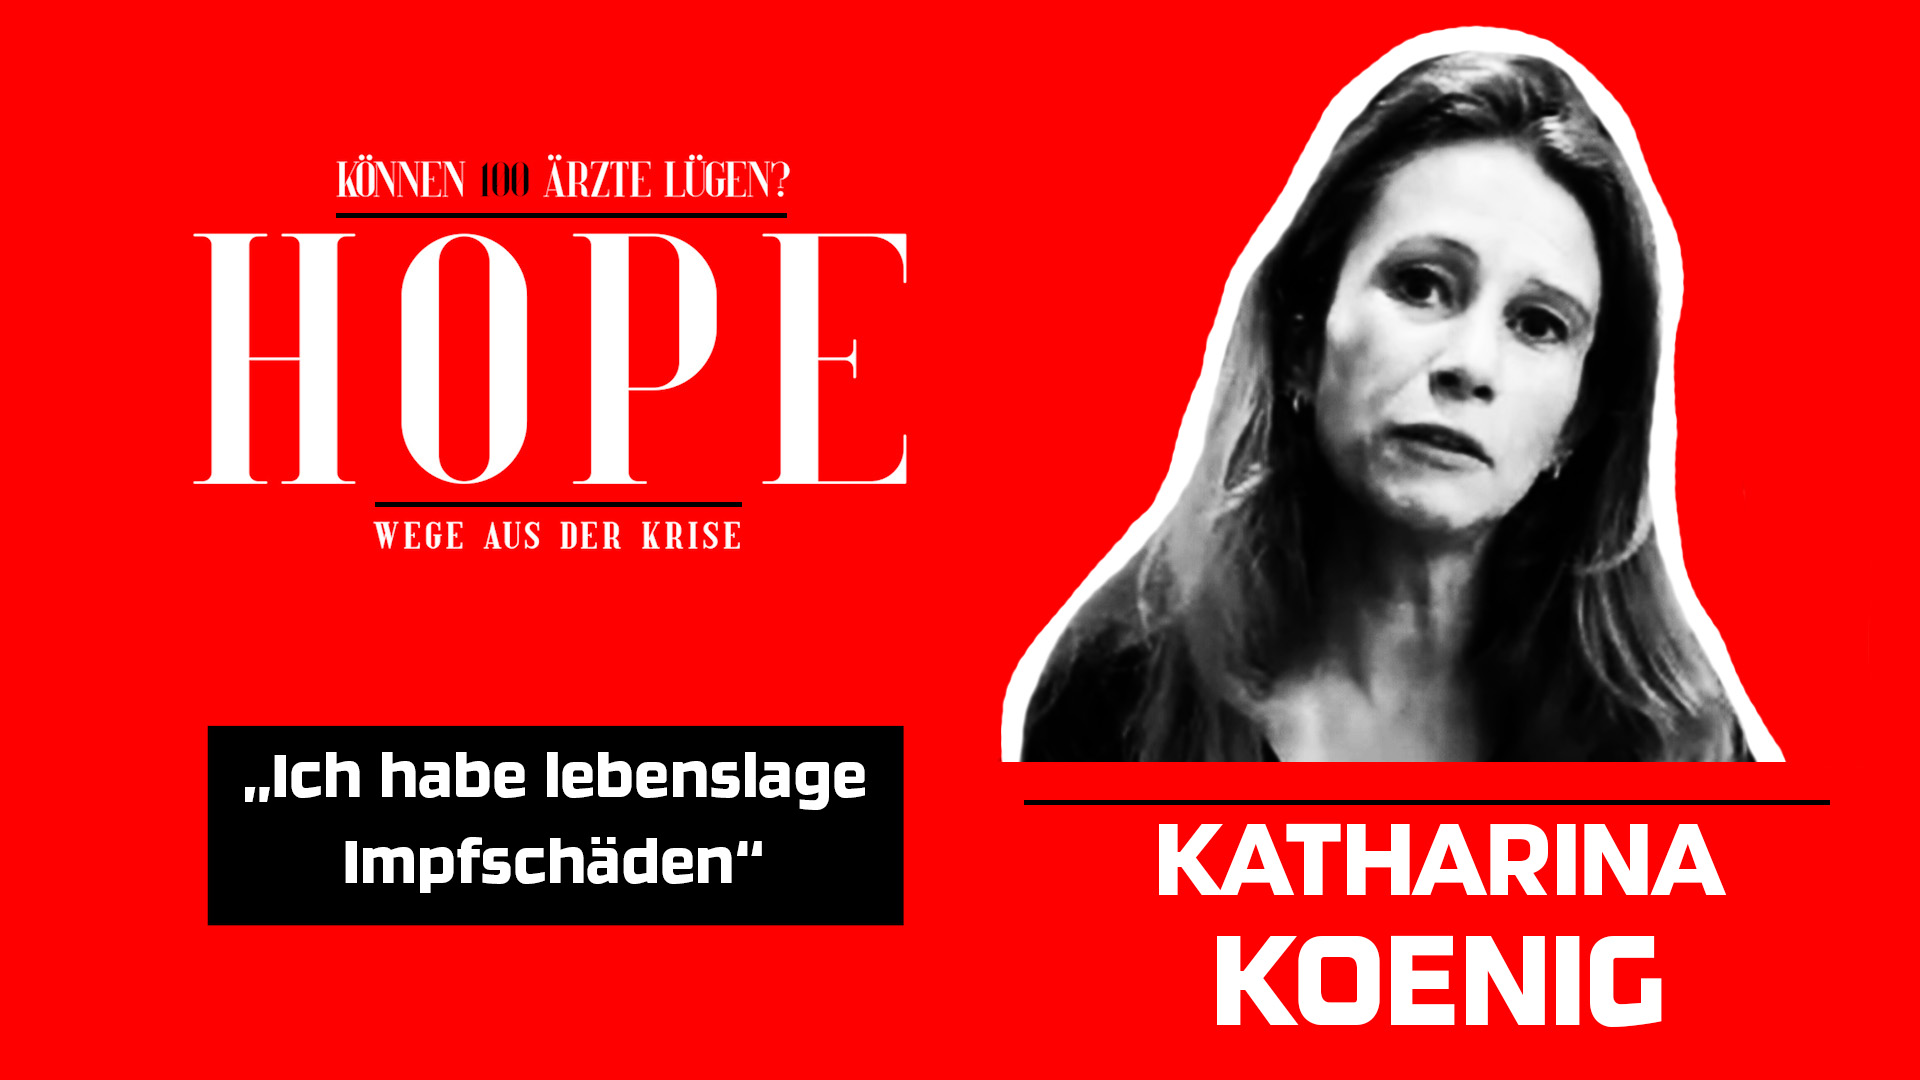 Kathariana Koenig